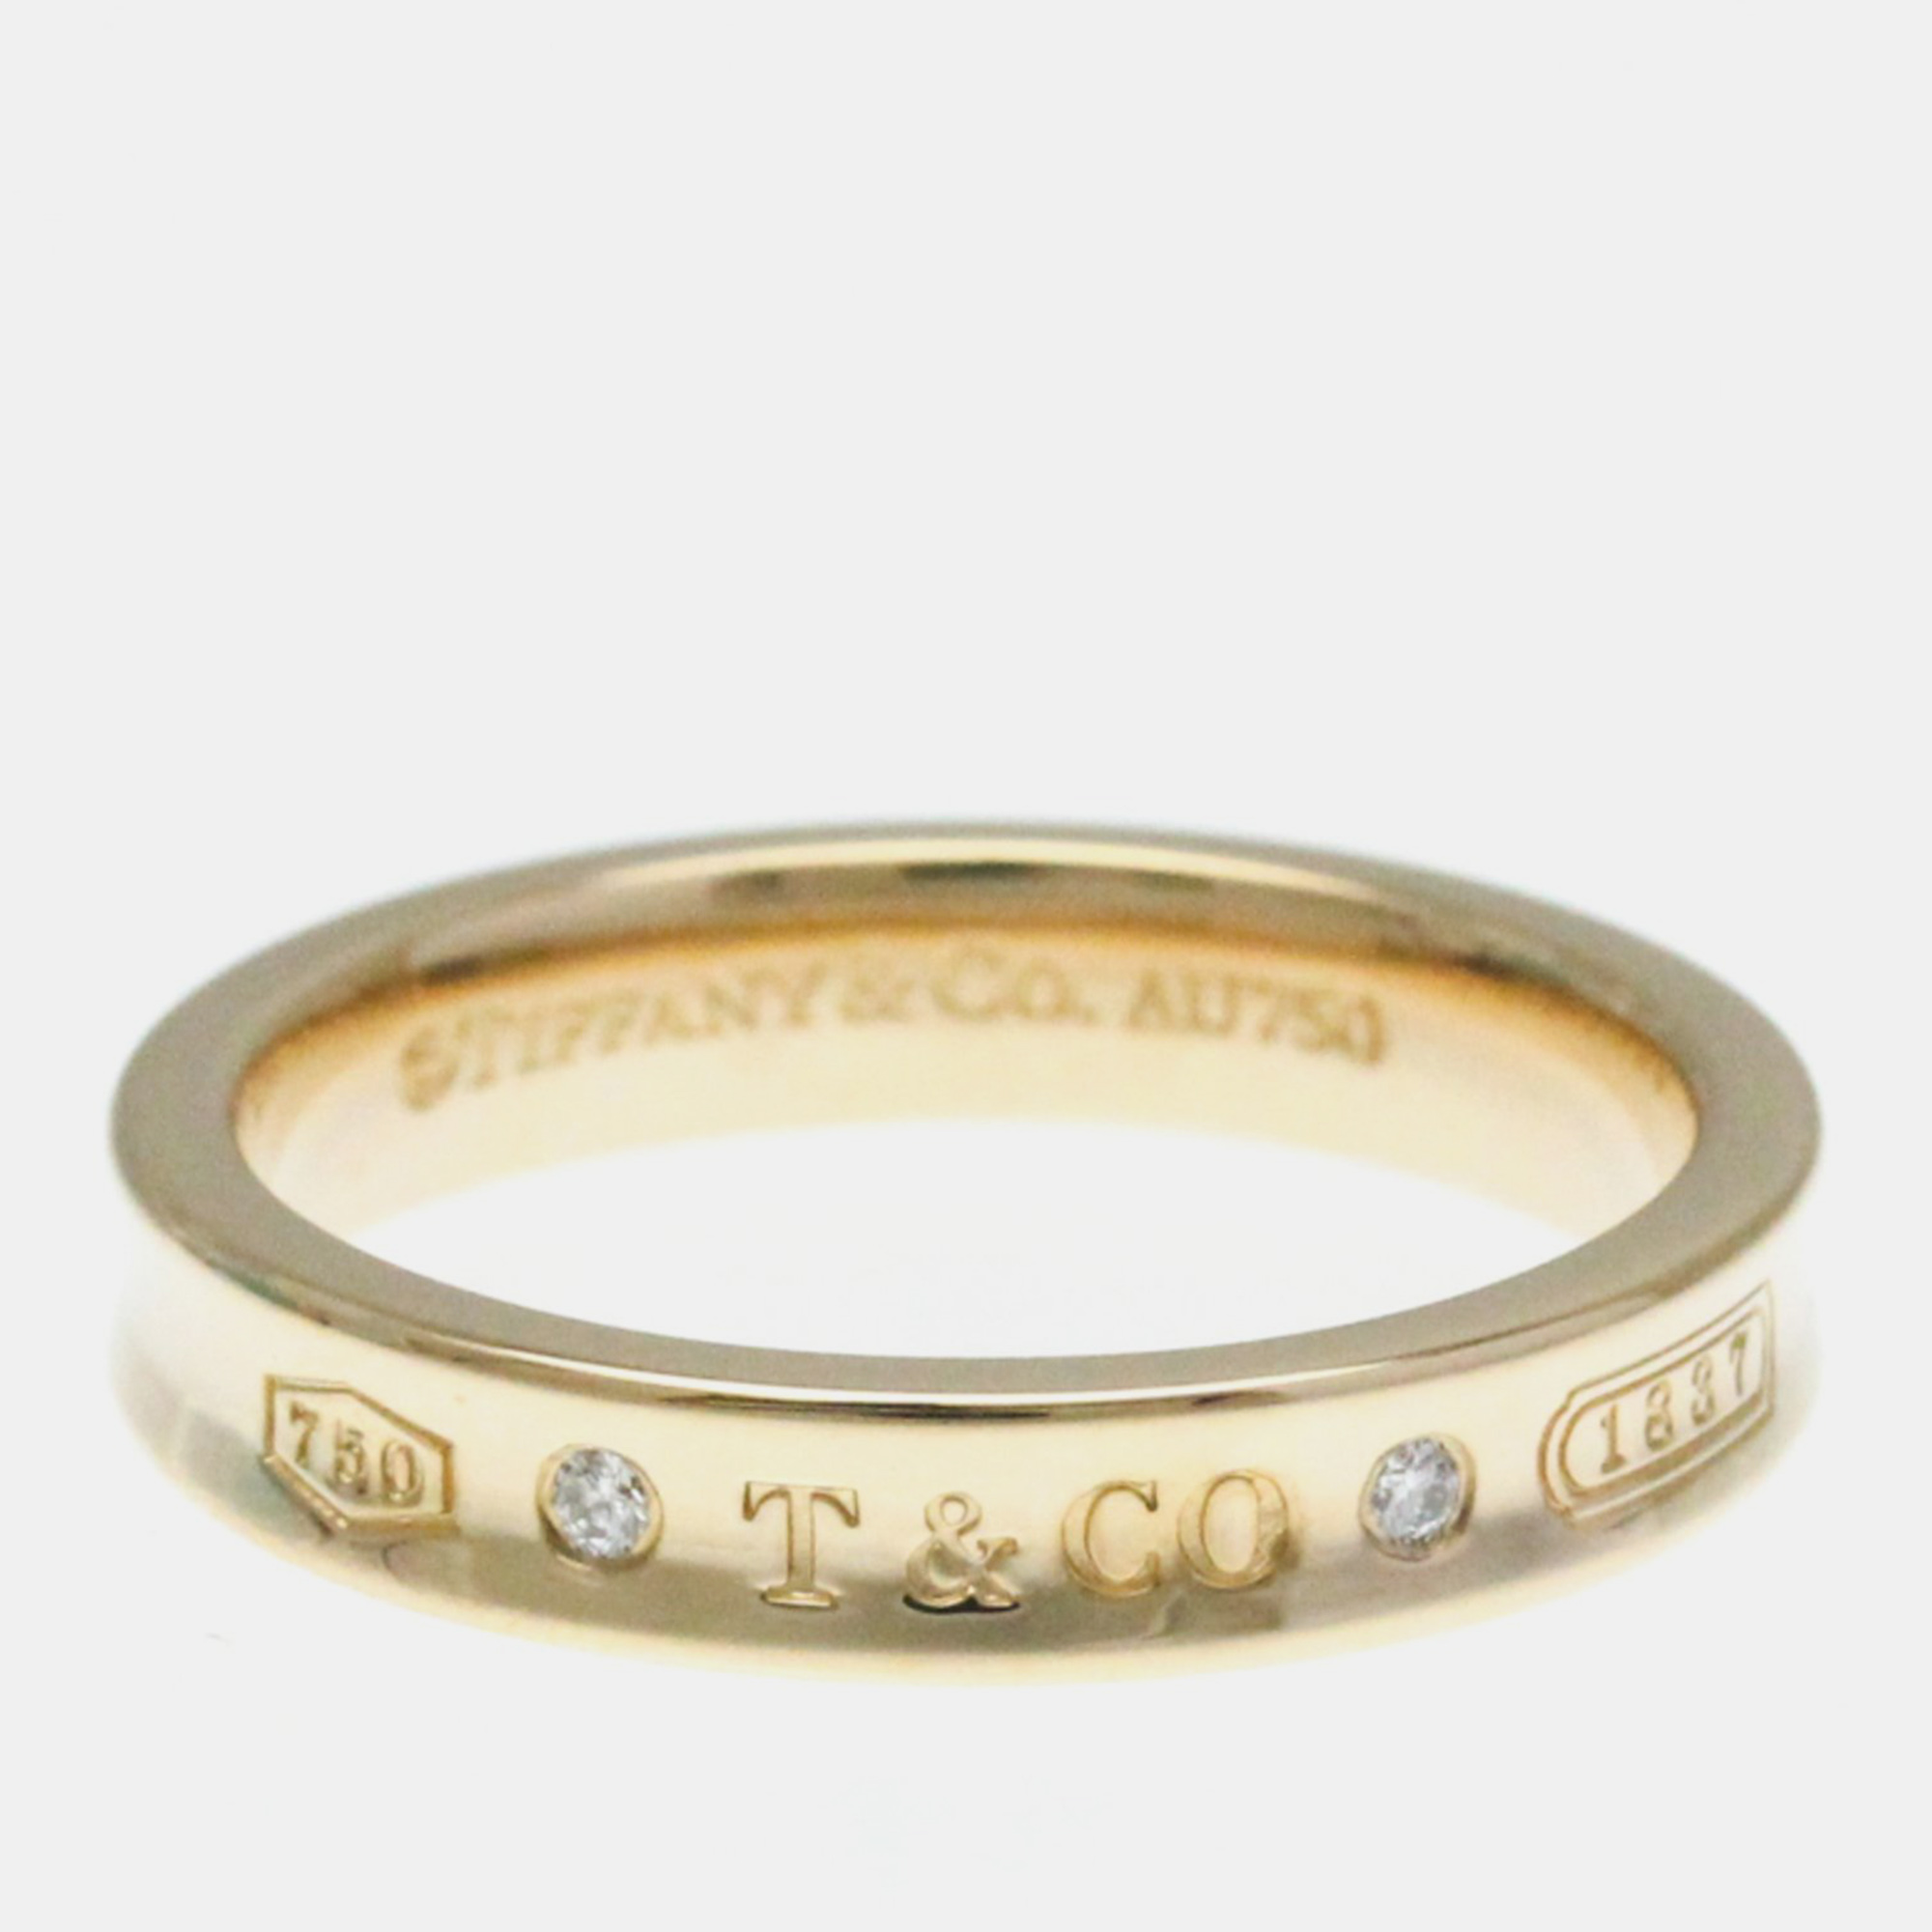 Tiffany & co. 18k rose gold and diamond 1837 band ring eu 57